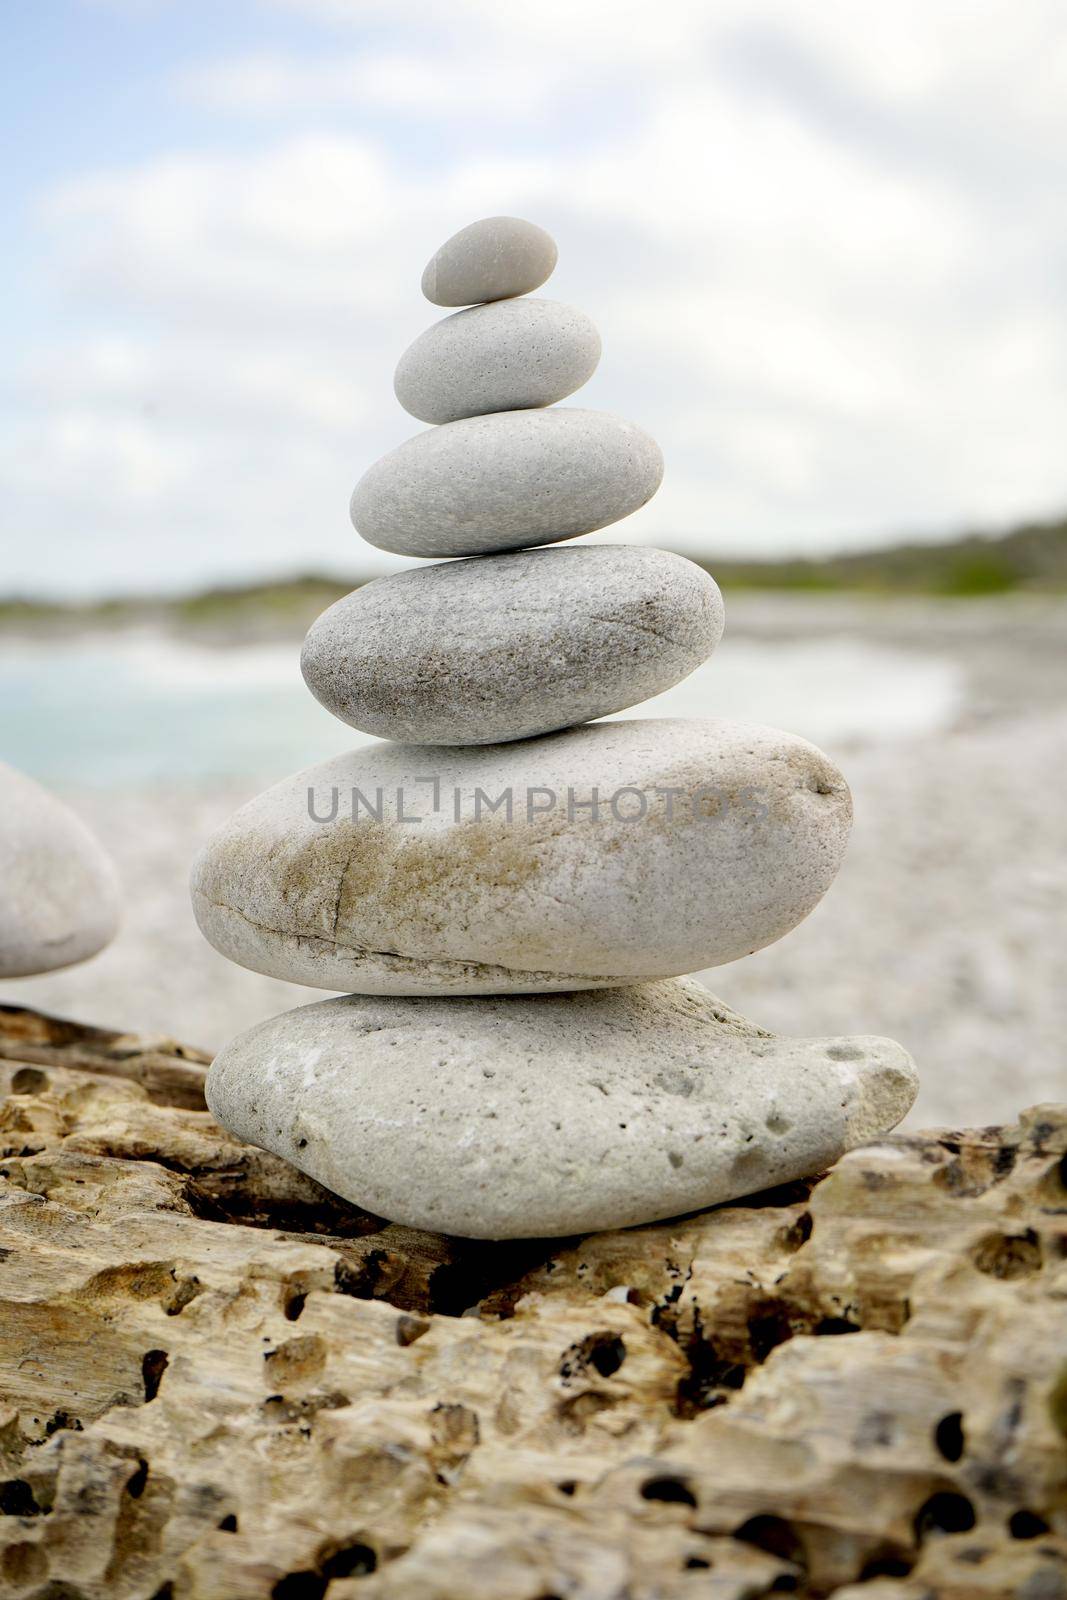 Stack of pebbles balancing, zen concept by fivepointsix